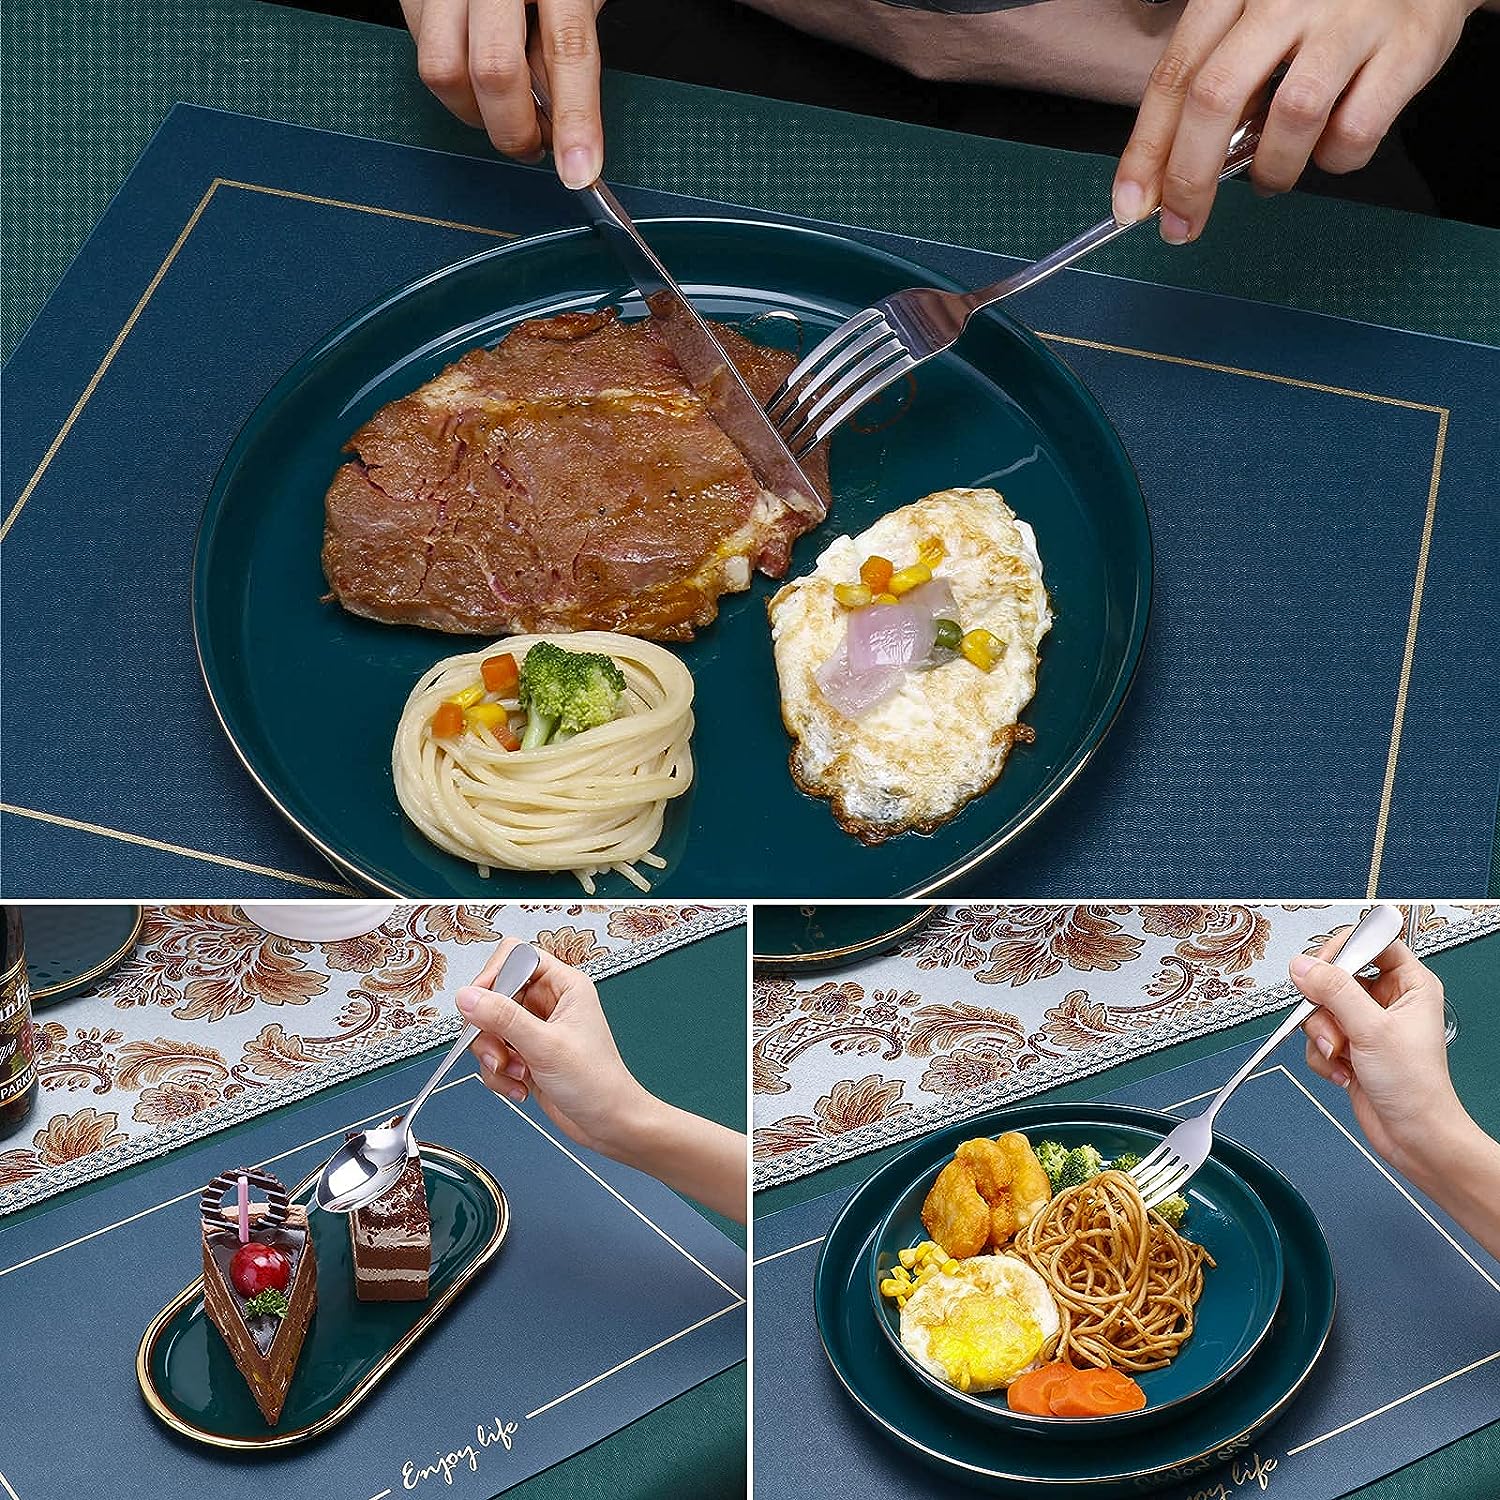 20-Piece Flatware Set, Restaurant Silverware Utensils Service for 4, Stainless Steel Home Tableware Cutlery, Dishwasher Safe